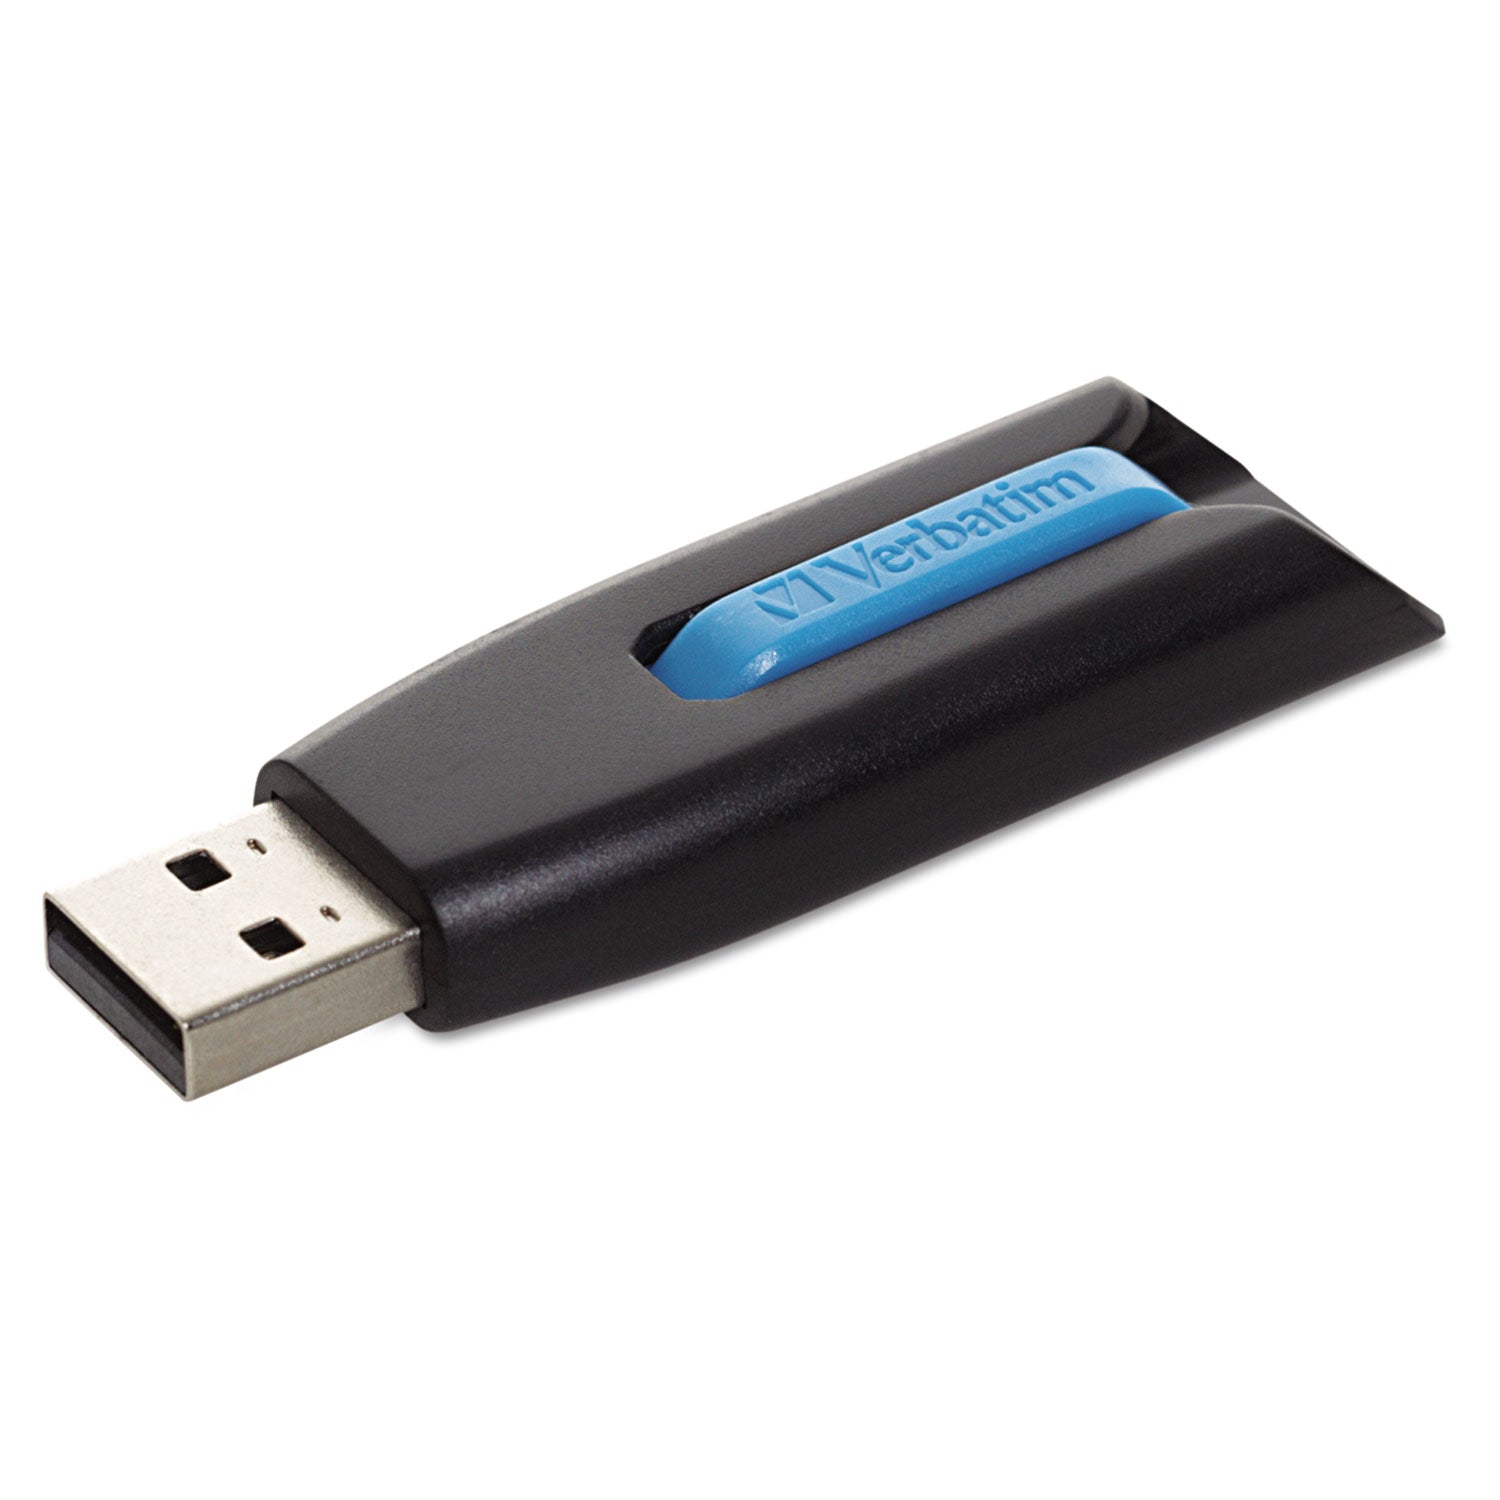 Store 'n' Go V3 USB 3.0 Drive, 16 GB, Black/Blue - 